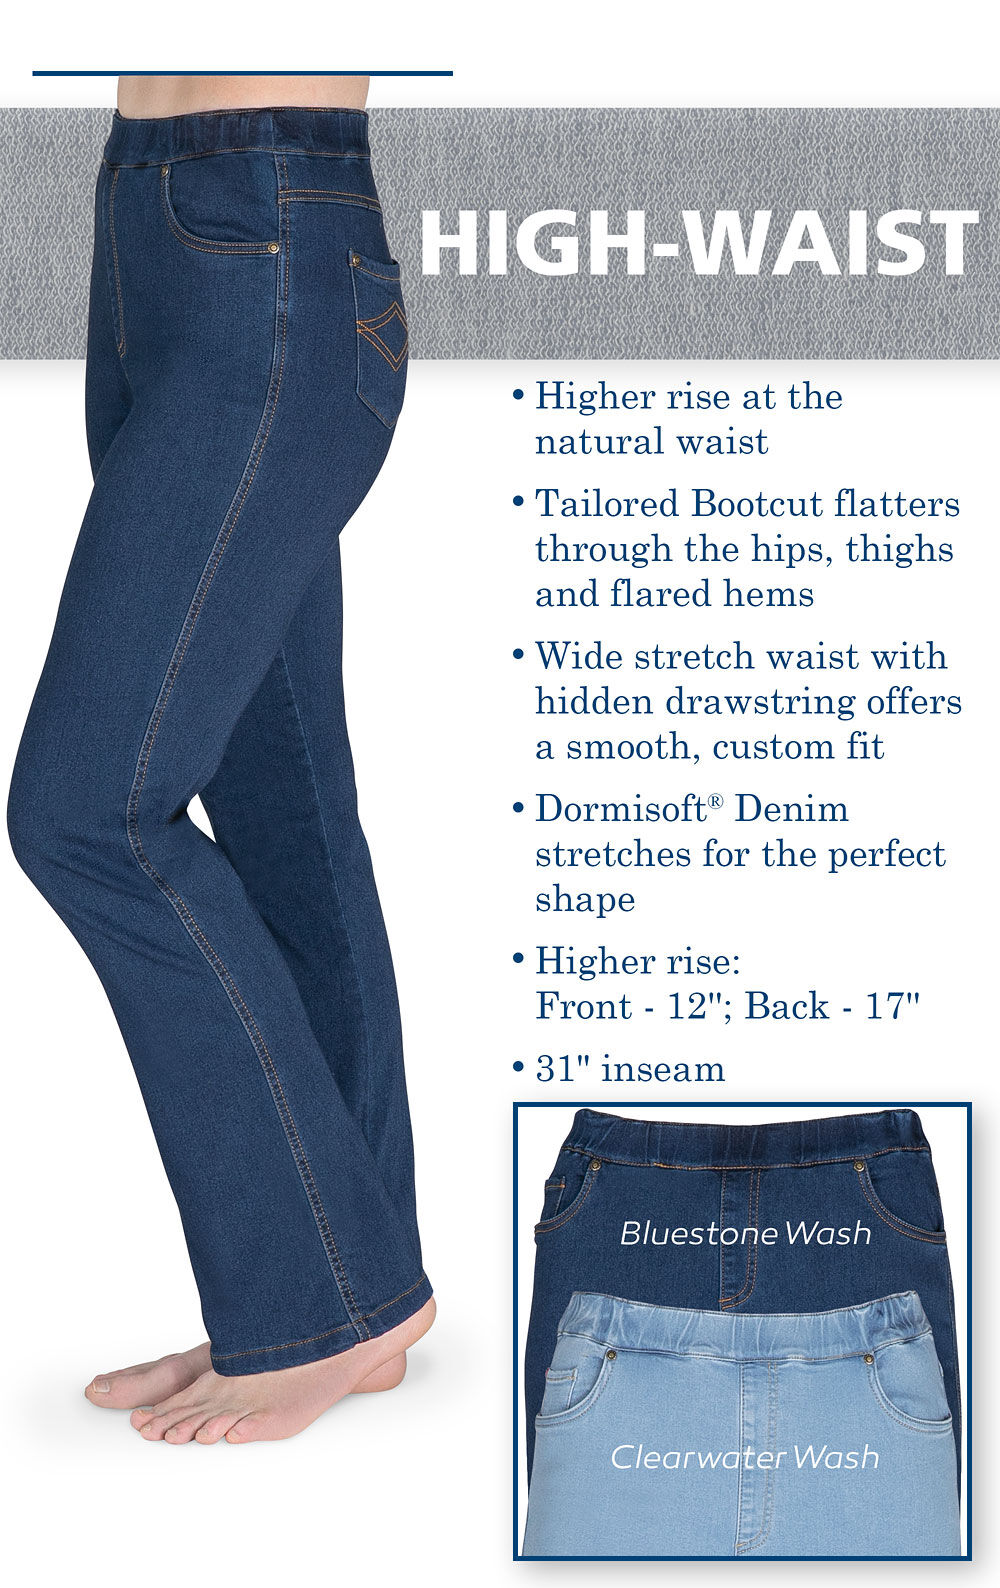 PajamaJeans® High-Waist Bootcut Jeans in Bootcut | PajamaJeans